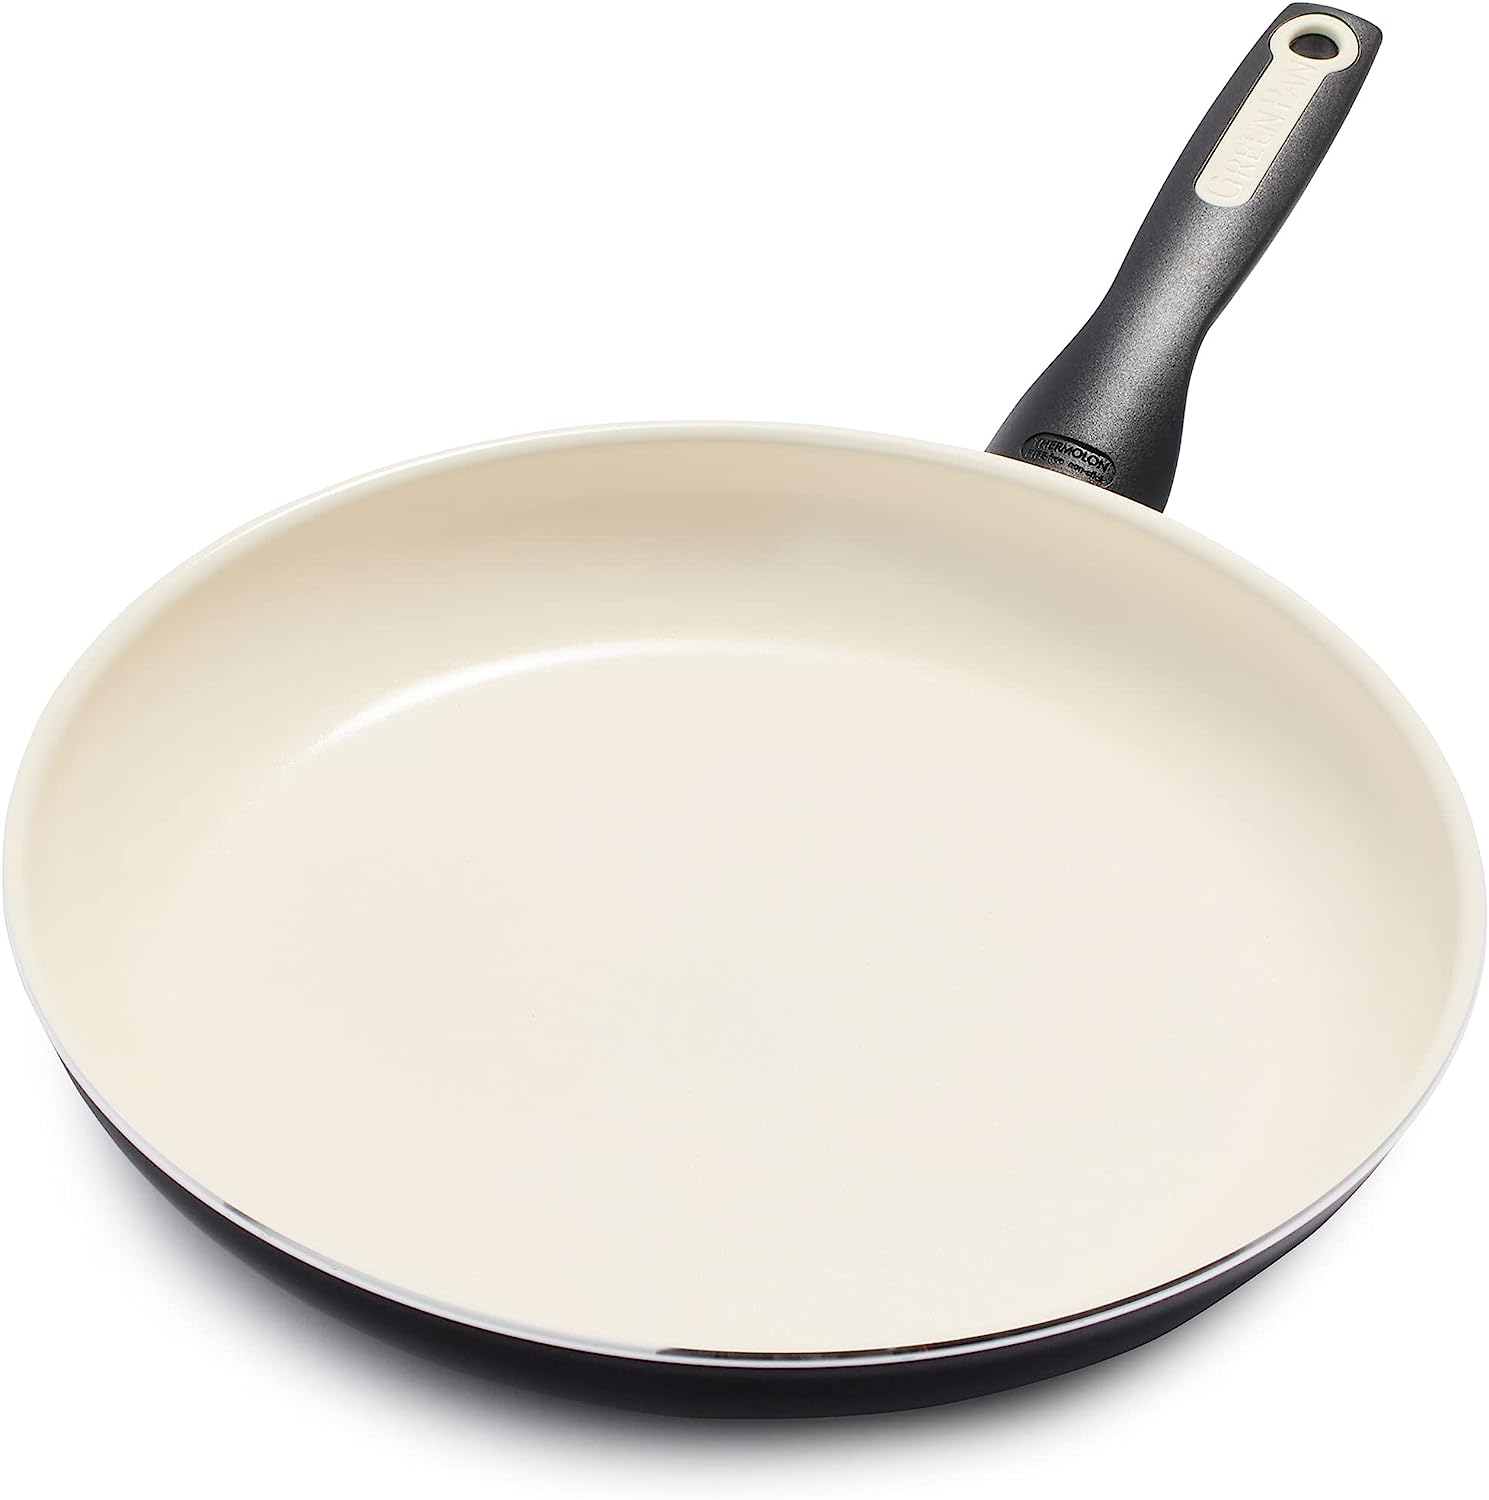 ceramic nonstick frying pan review